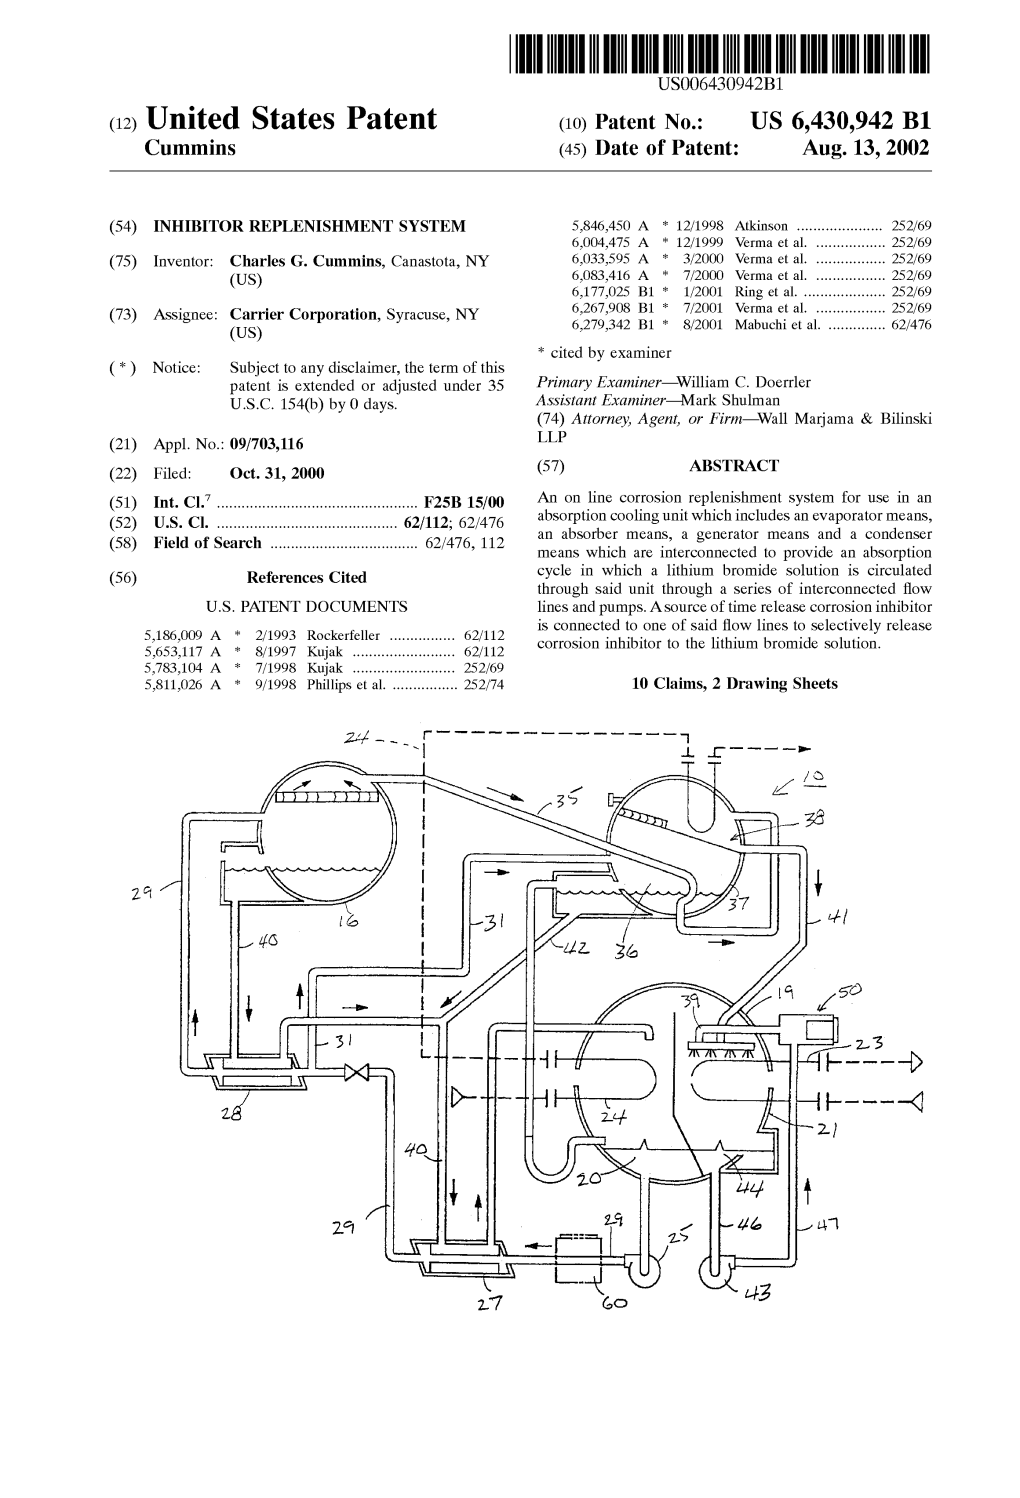 (12) United States Patent (10) Patent No.: US 6,430,942 B1 Cummins (45) Date of Patent: Aug